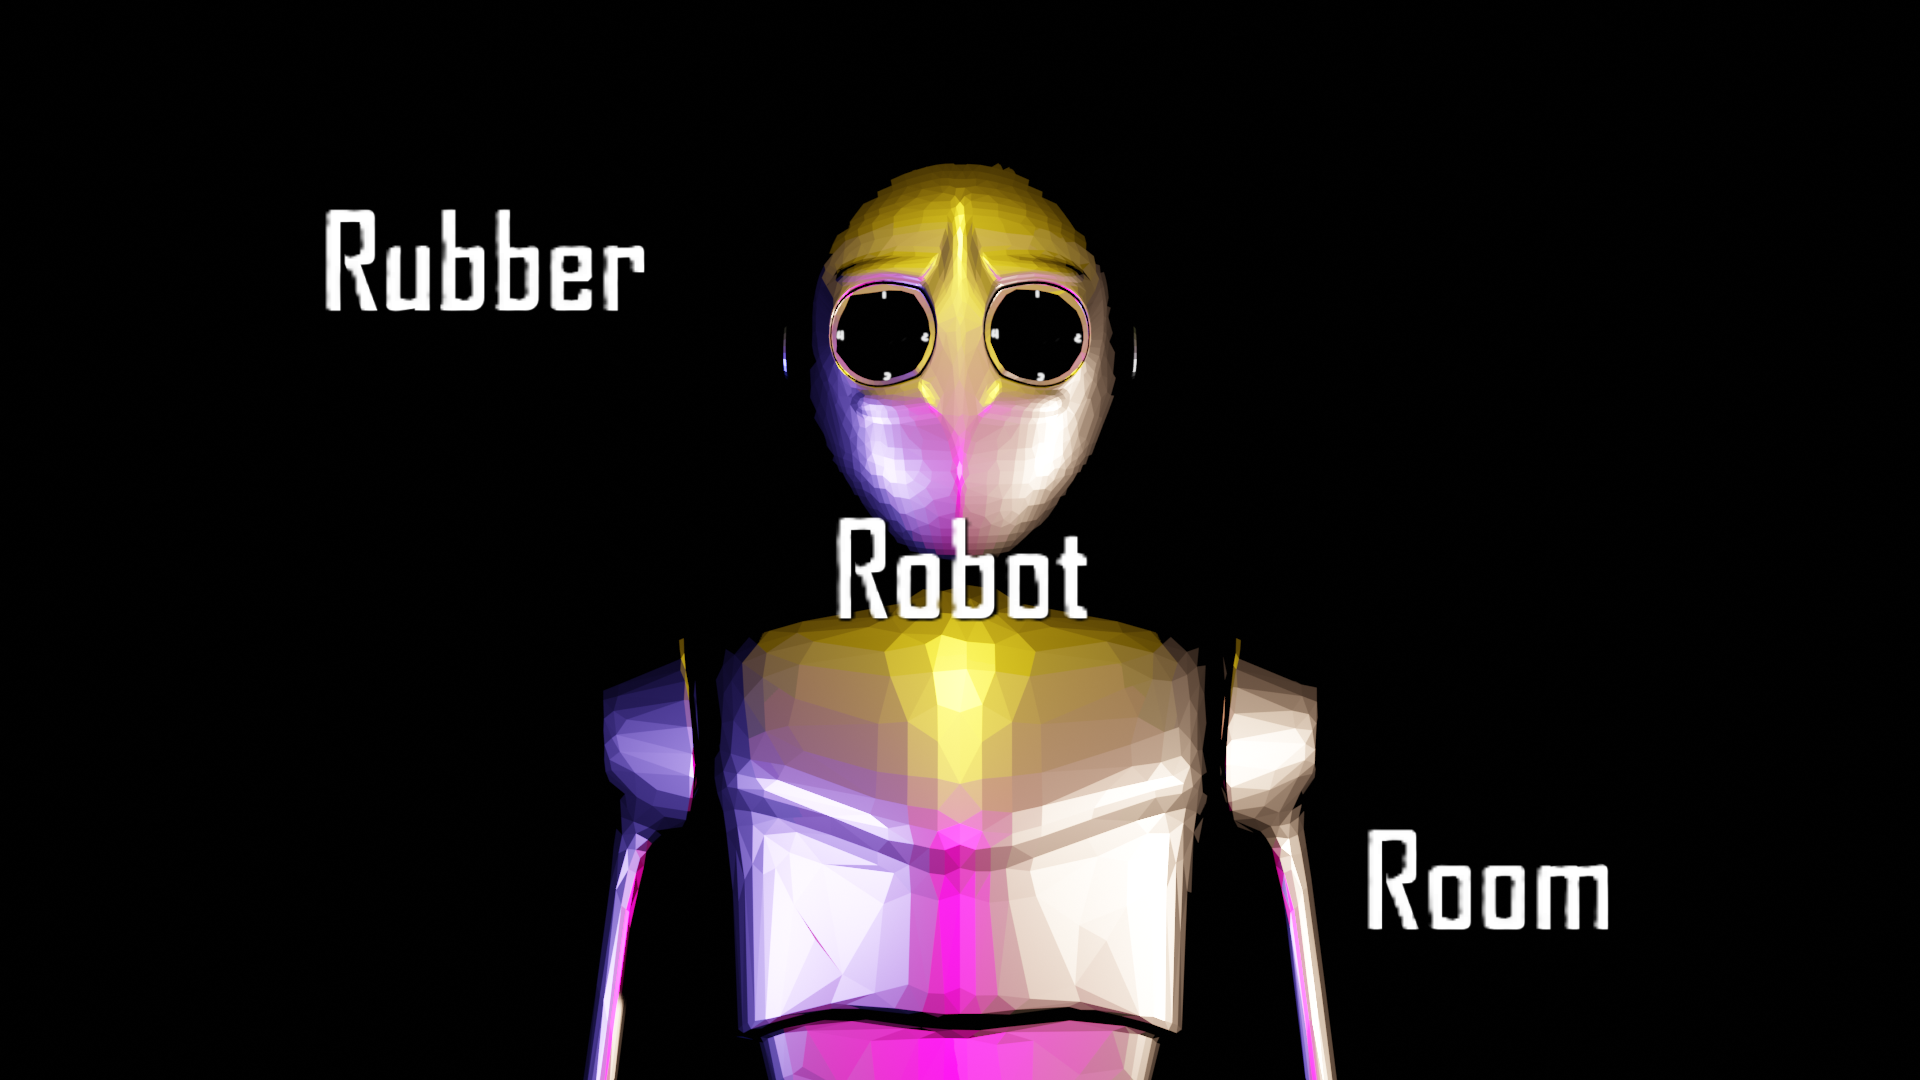 Rubber Robot Room